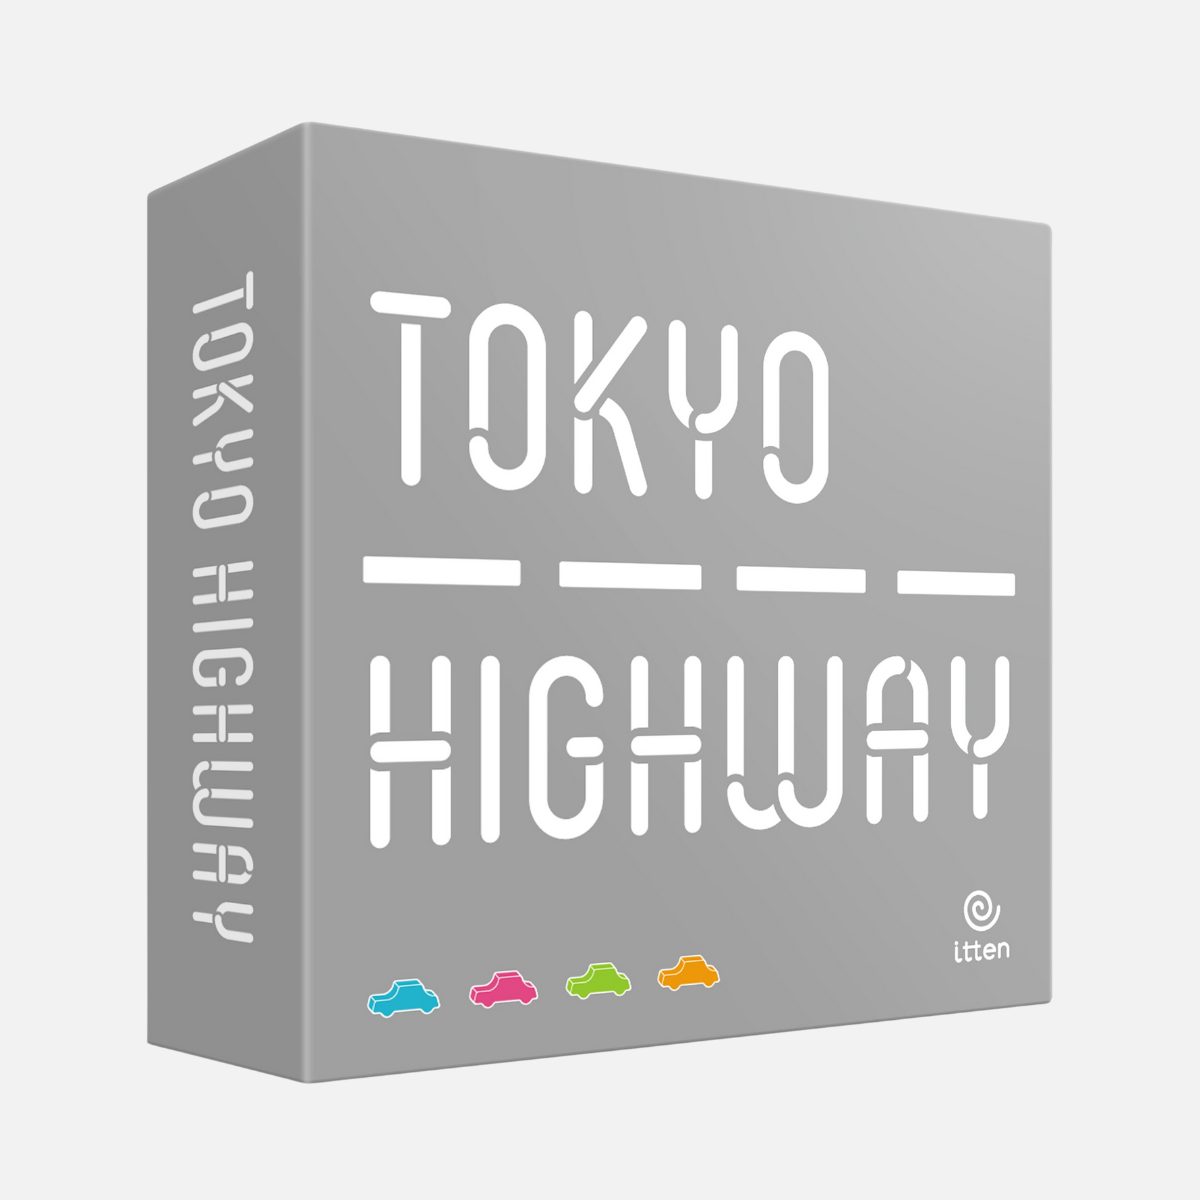 Tokyo Highway board game